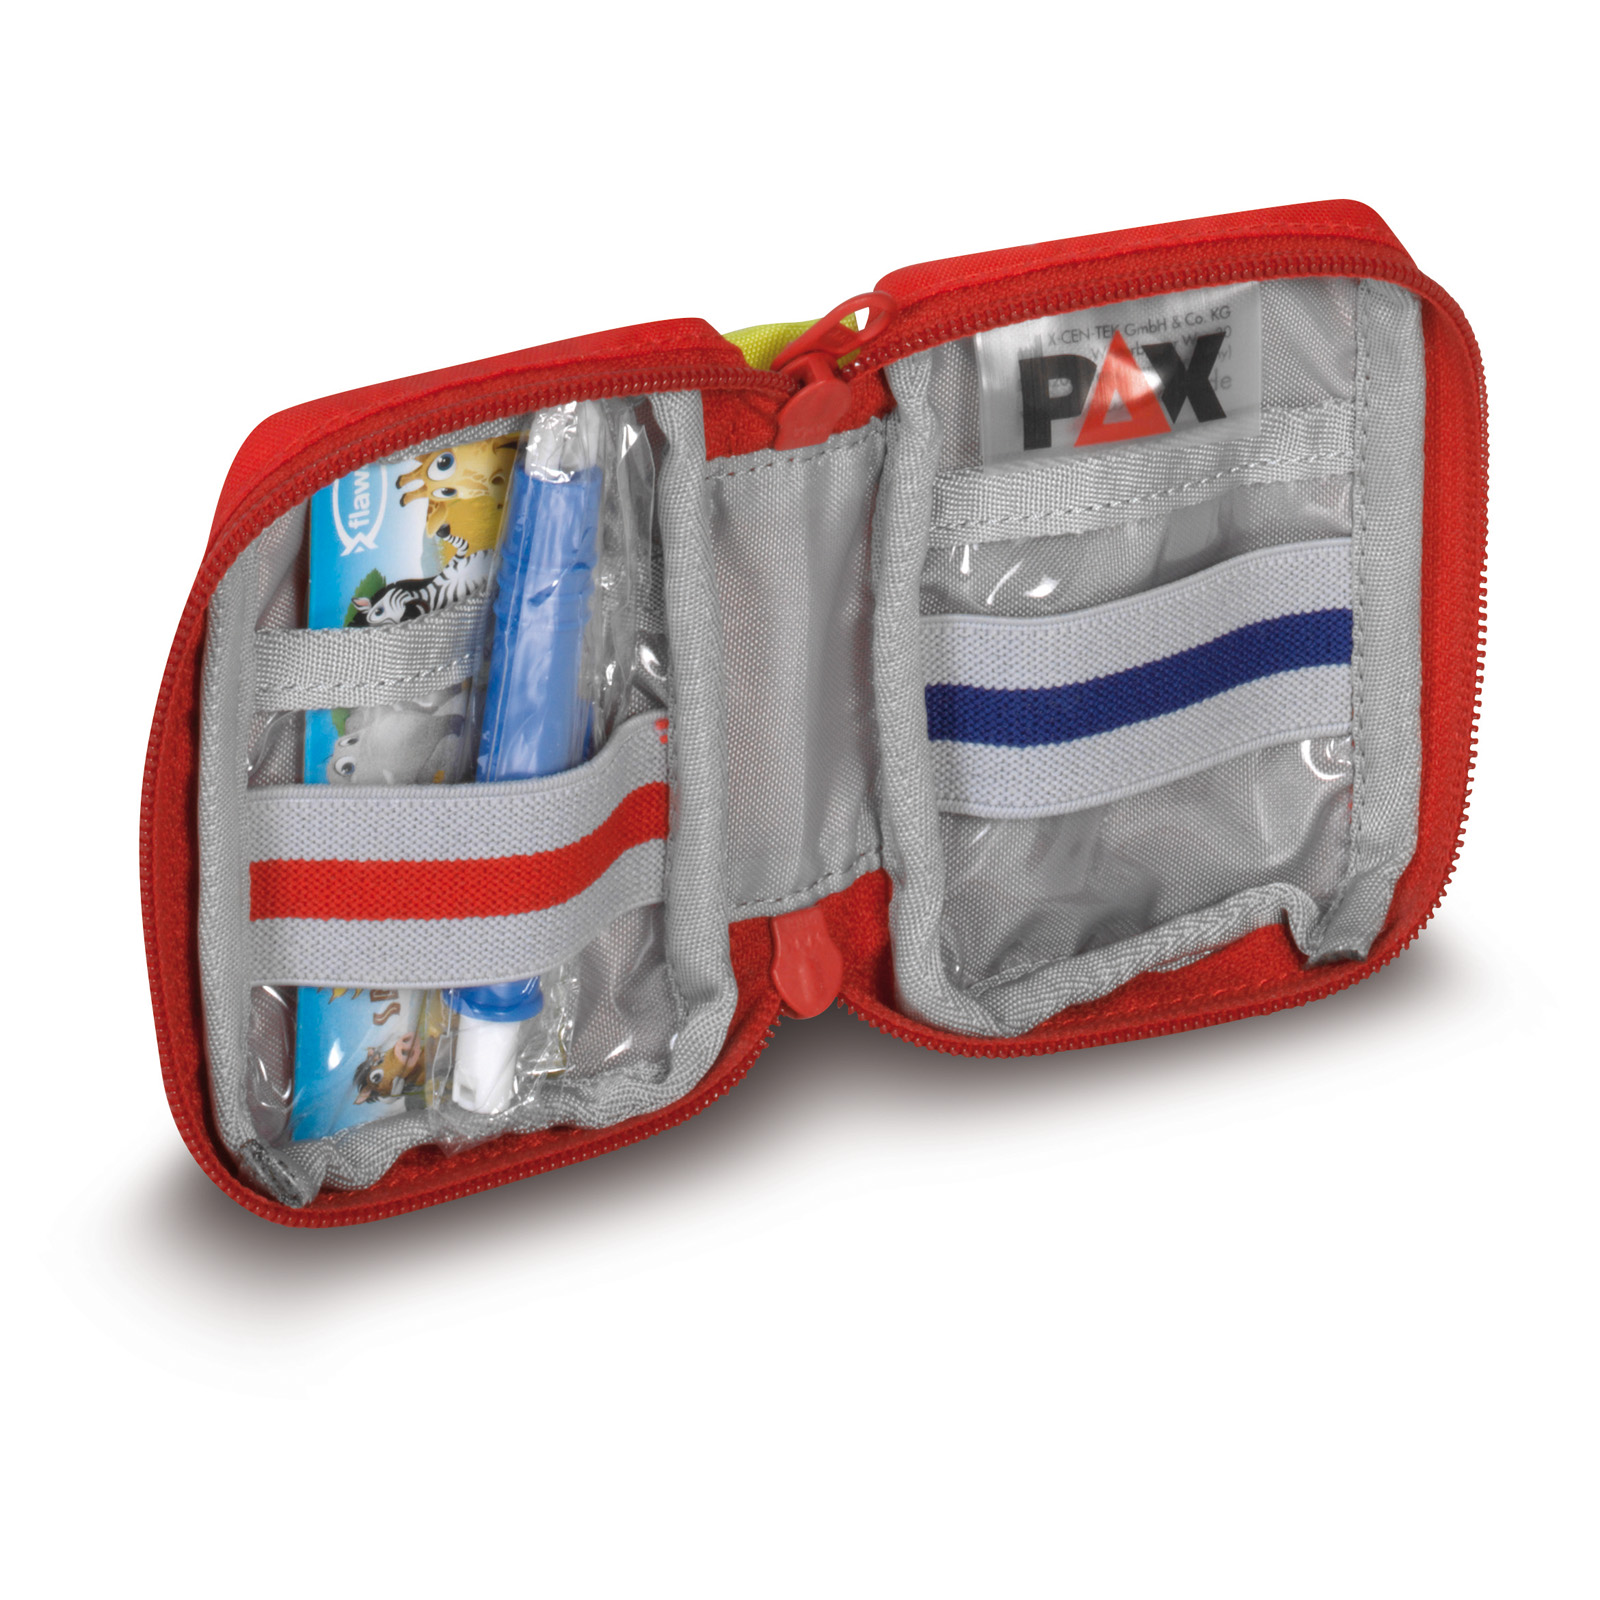 PAX Erste Hilfe Tasche - L, PAX-Light, Maße 25 x 19 x